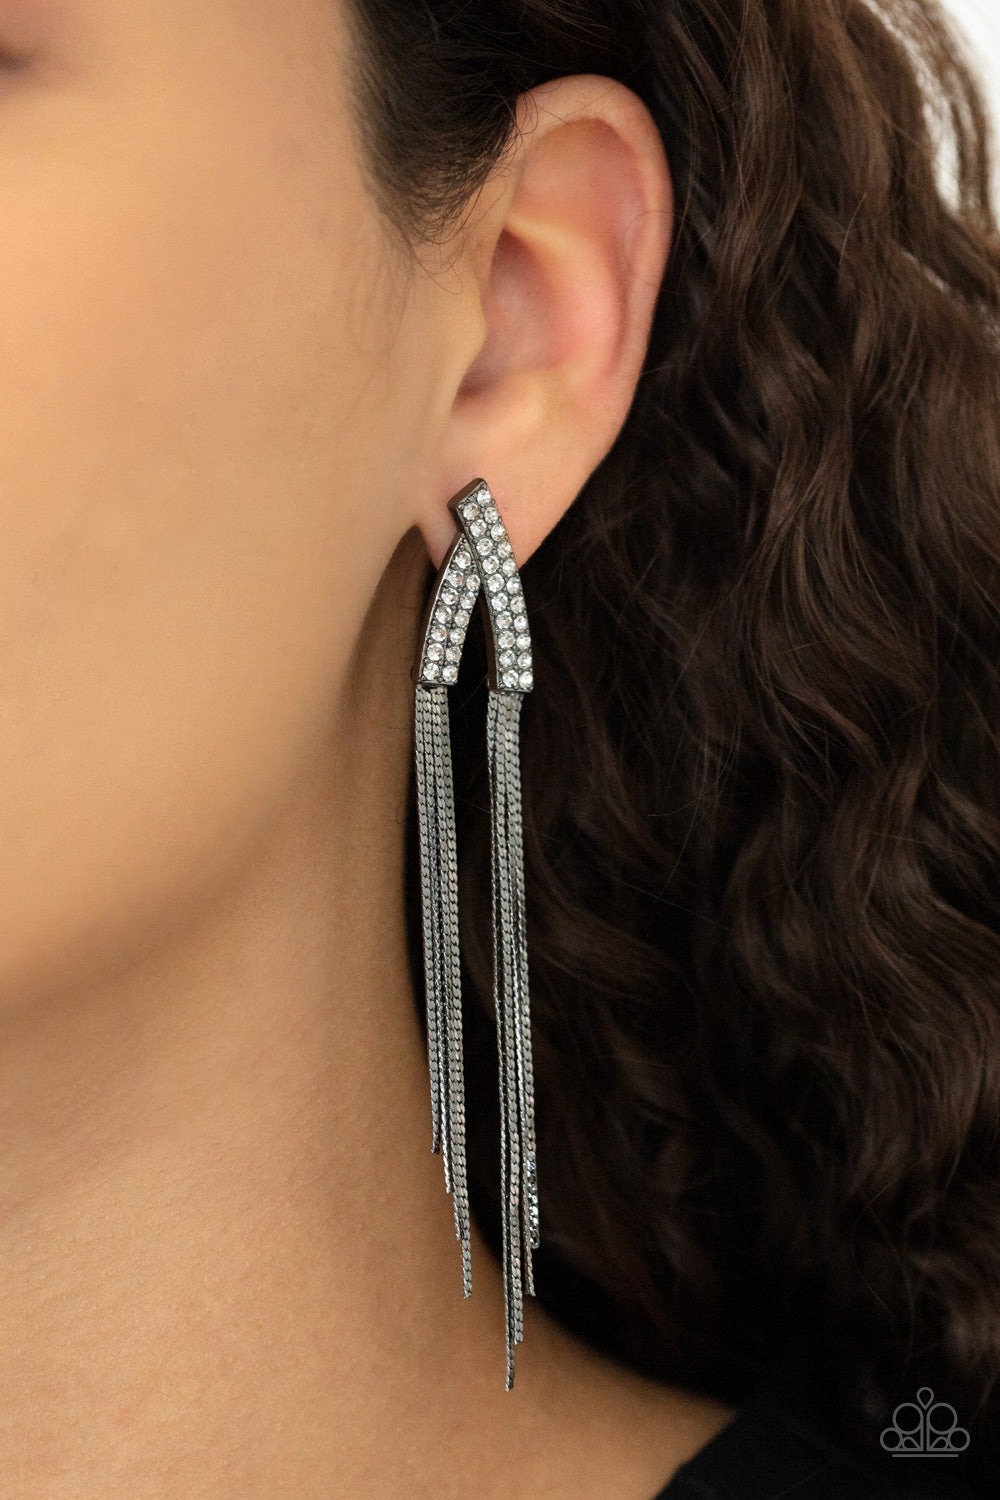 PRE-ORDER - Paparazzi It Takes Two To TASSEL - Black - Earrings - $5 Jewelry with Ashley Swint